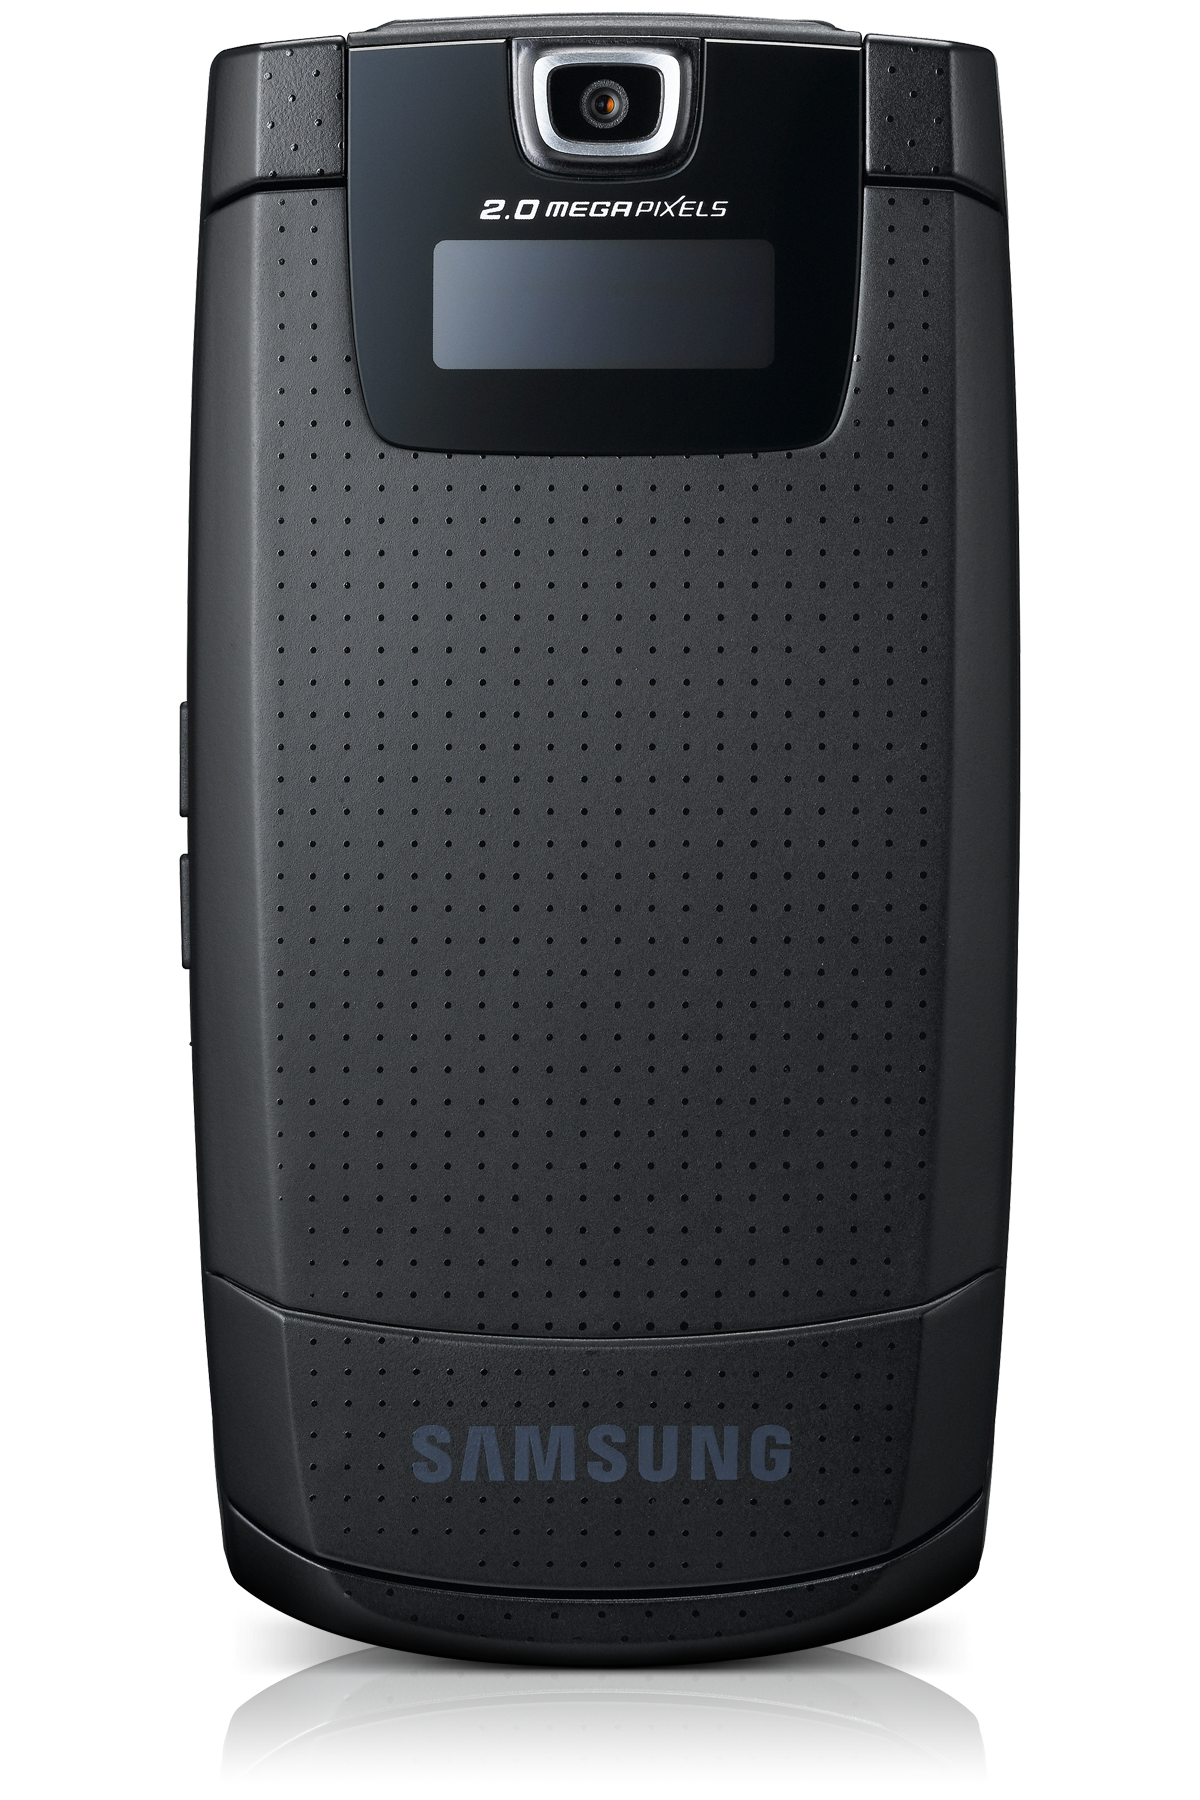 Samsung sgh купить. Samsung SGH-d830. Раскладушка самсунг d830. Samsung SGH-d838. Samsung SGH-d830 аккумулятор.